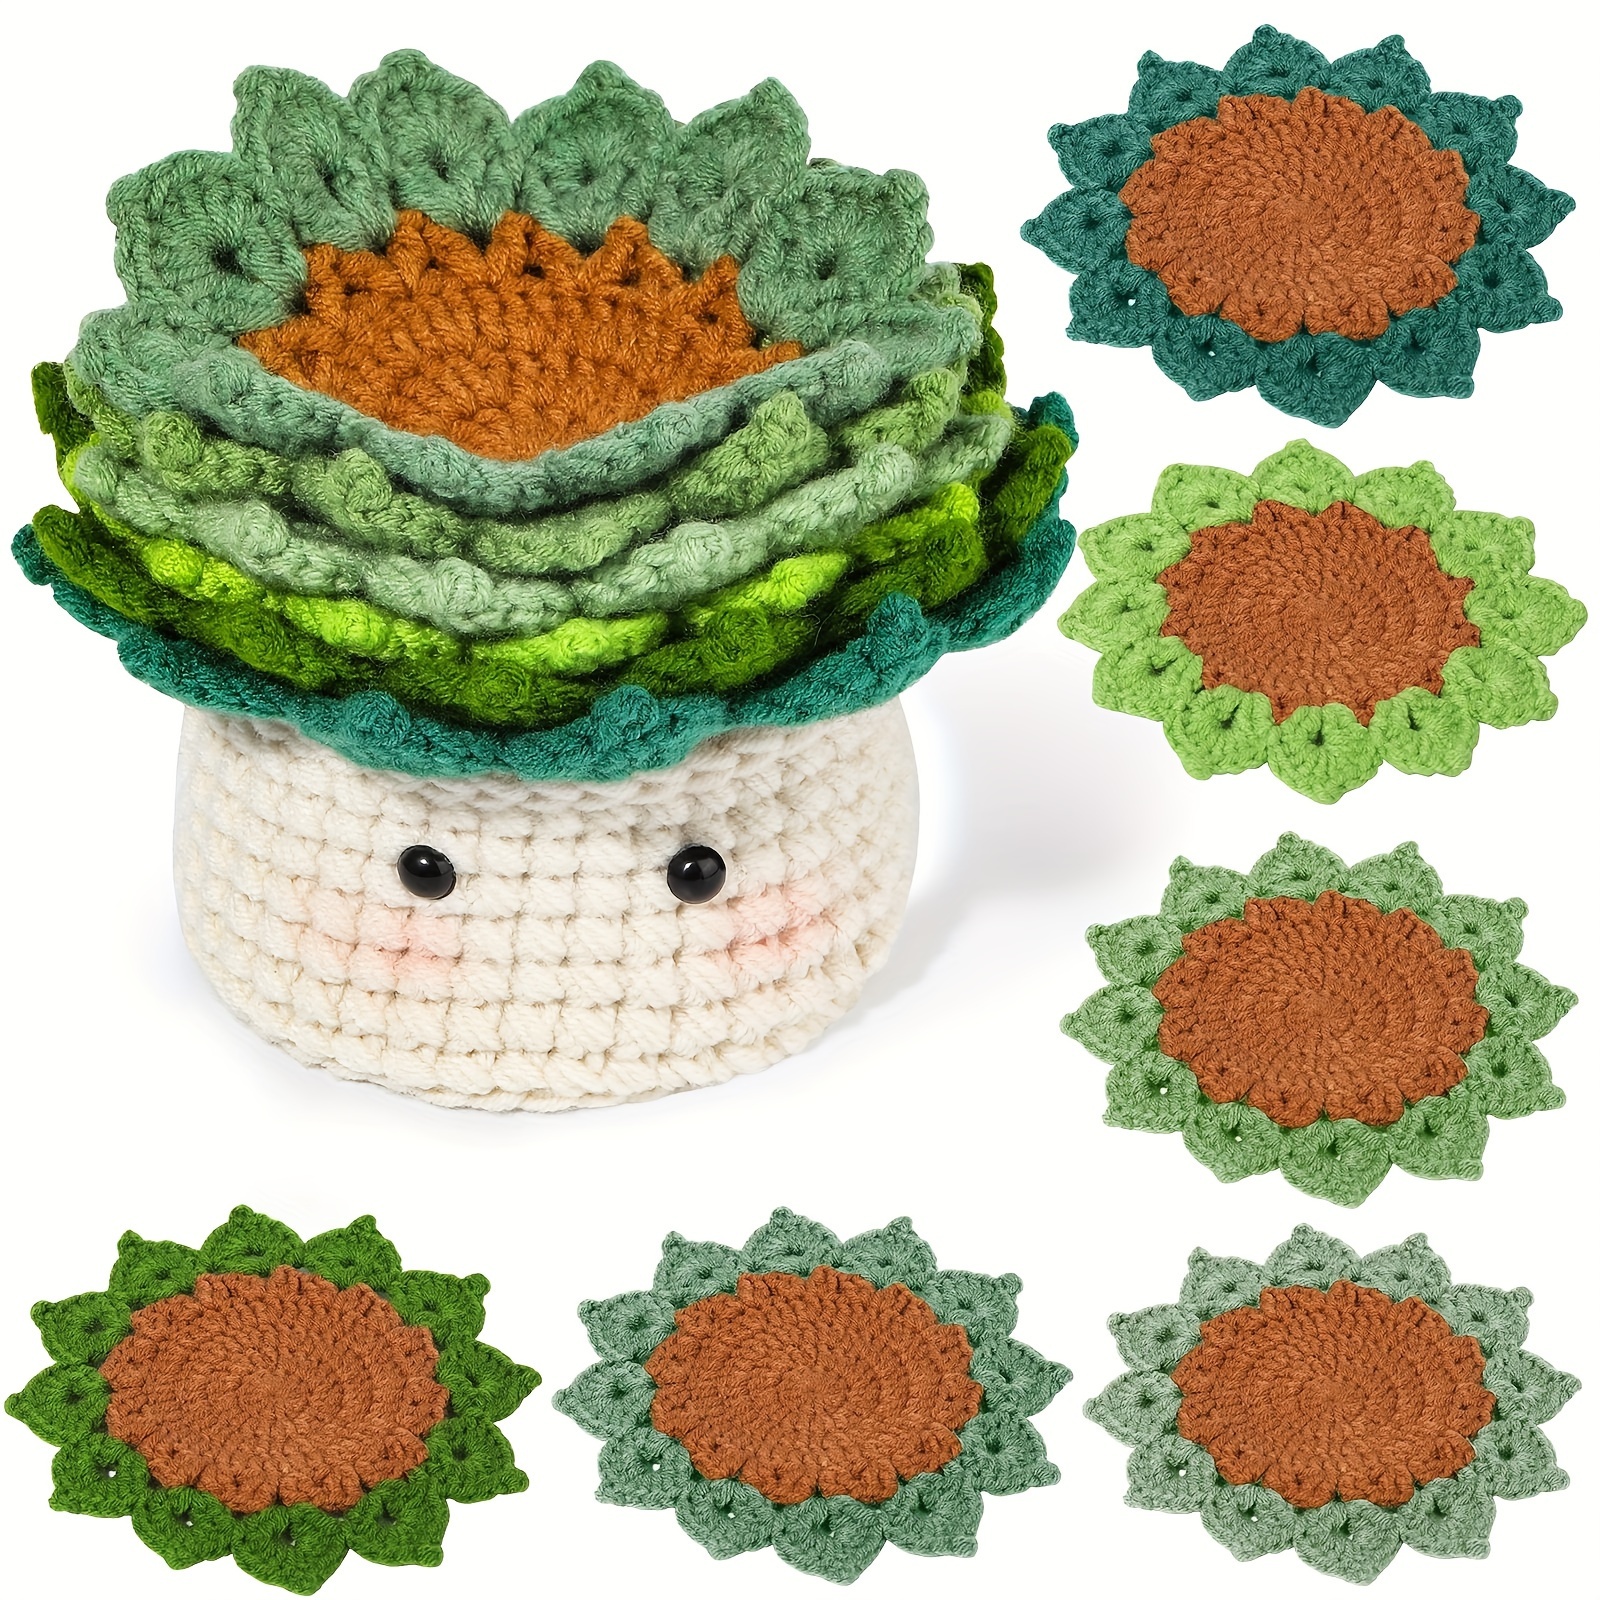 Crochetta Crochet Kit for Beginners, Crochet Kit W Step-by-Step Video Tutorials, Crochet Starter Kit Learn to Crochet Kits for Adults Kids Beginners